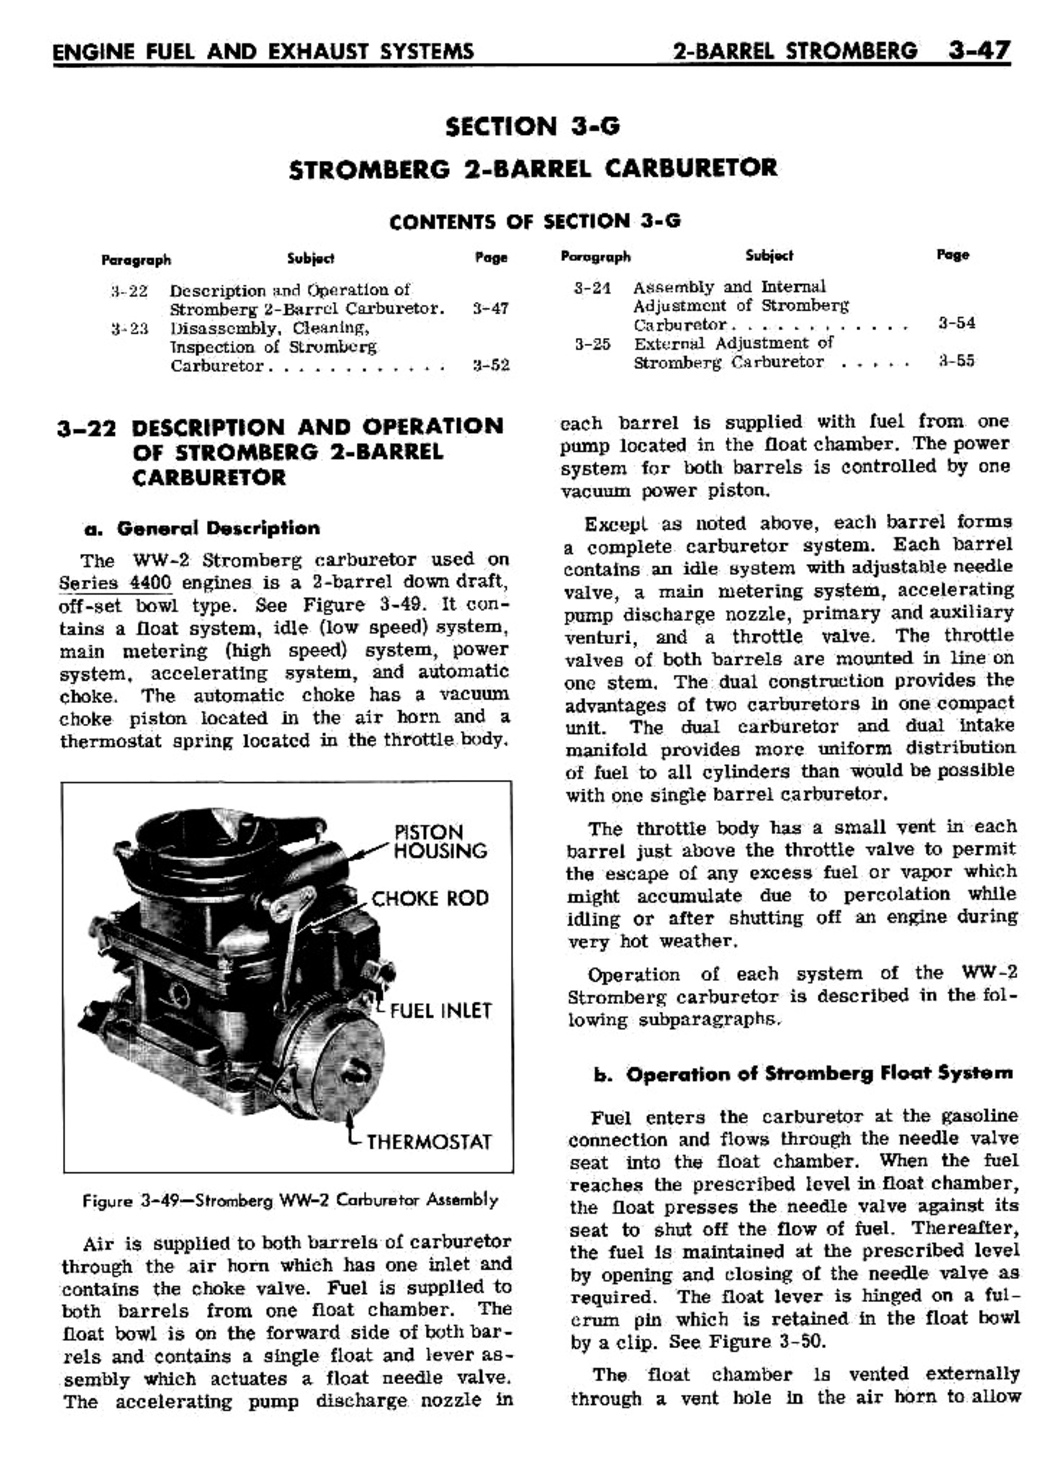 n_04 1961 Buick Shop Manual - Engine Fuel & Exhaust-047-047.jpg